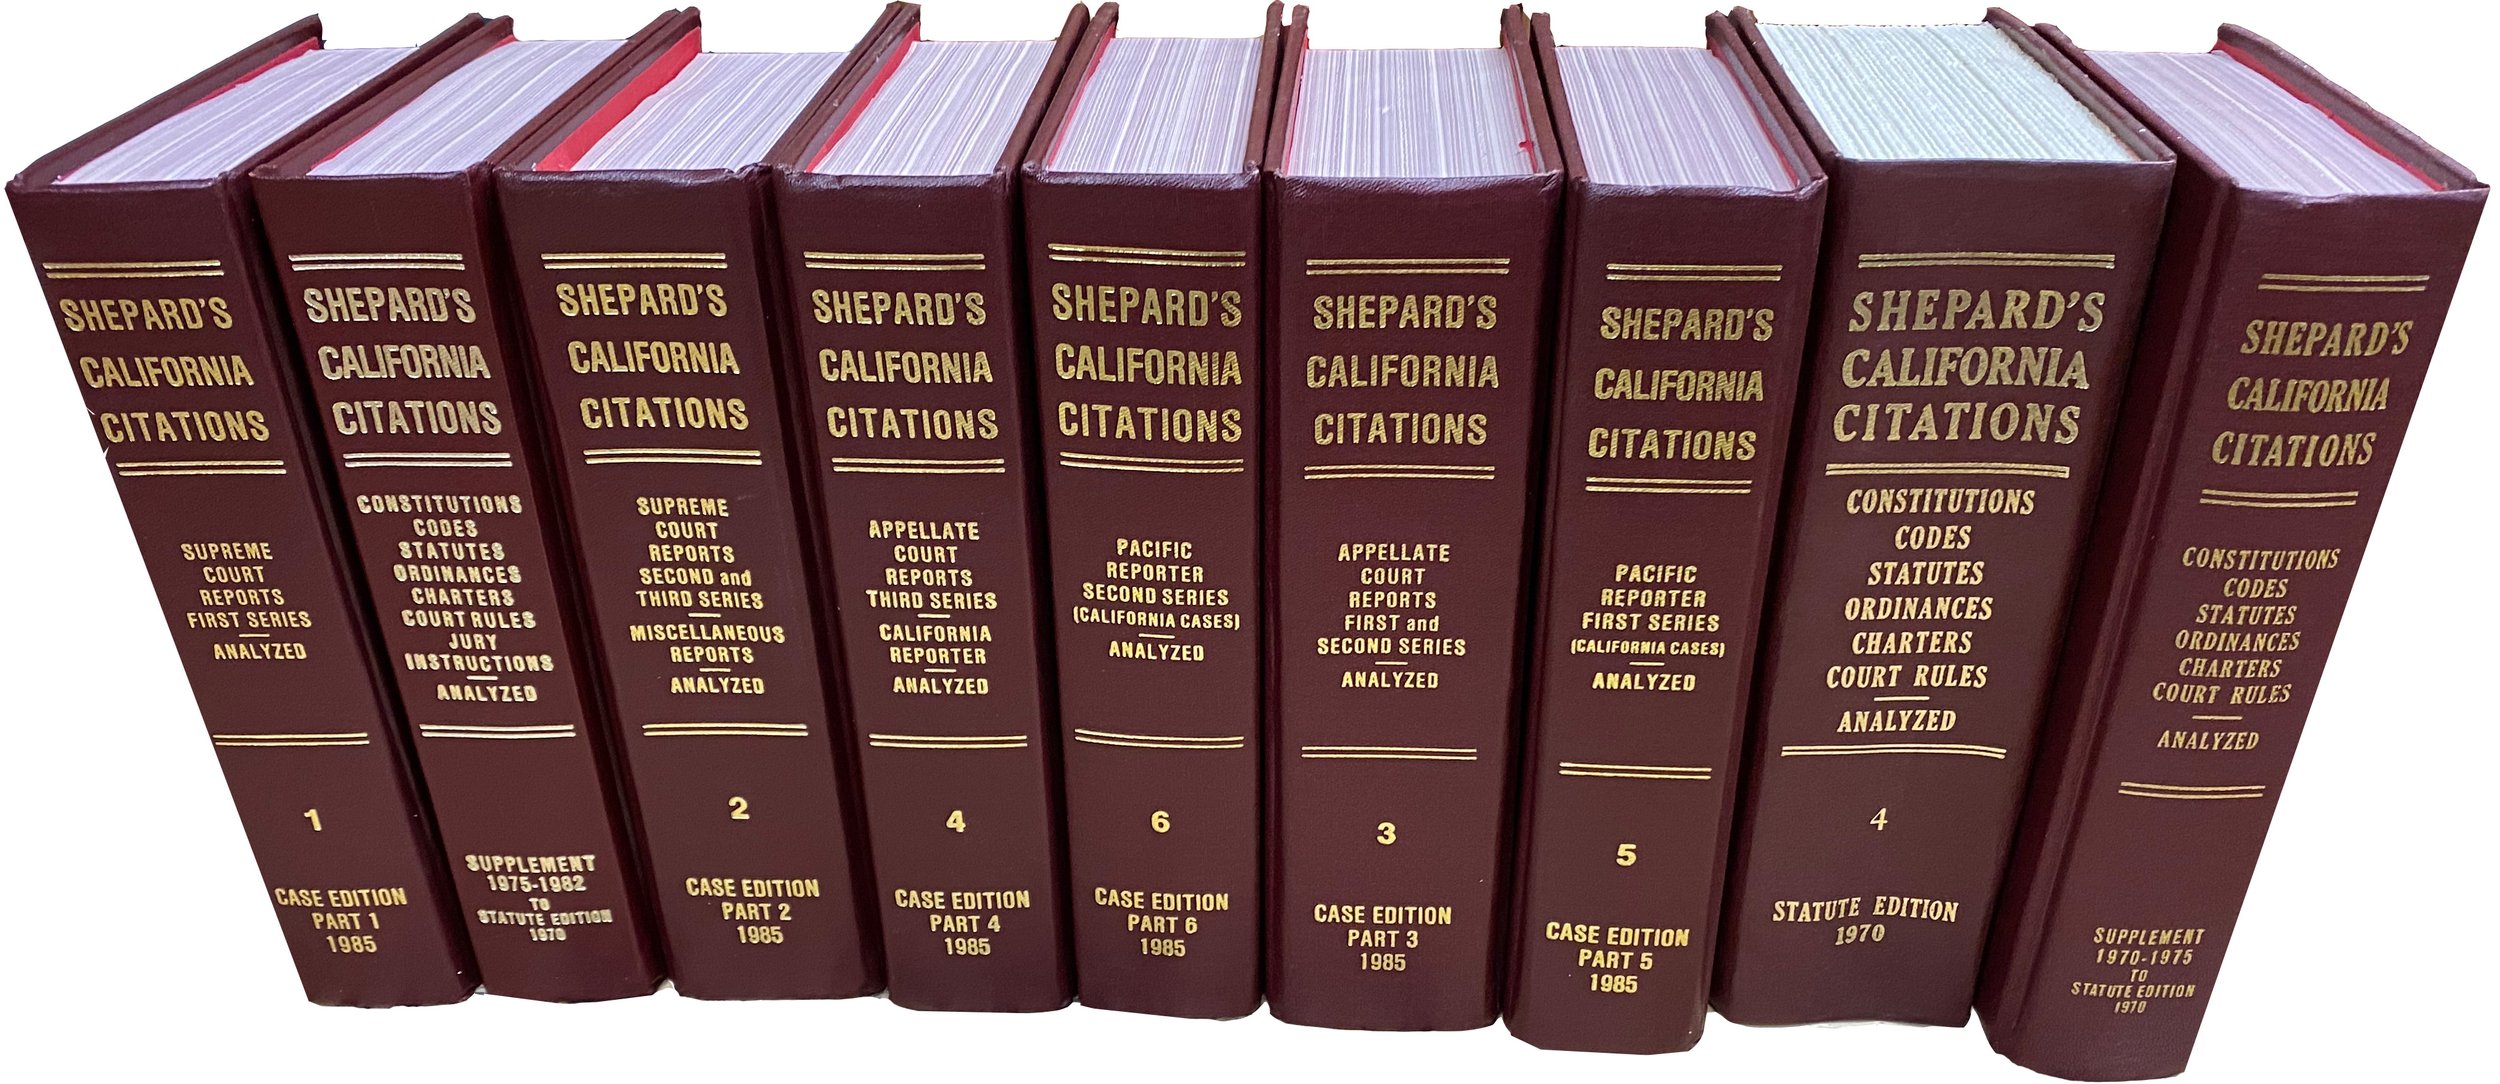 Shepard's California Citations